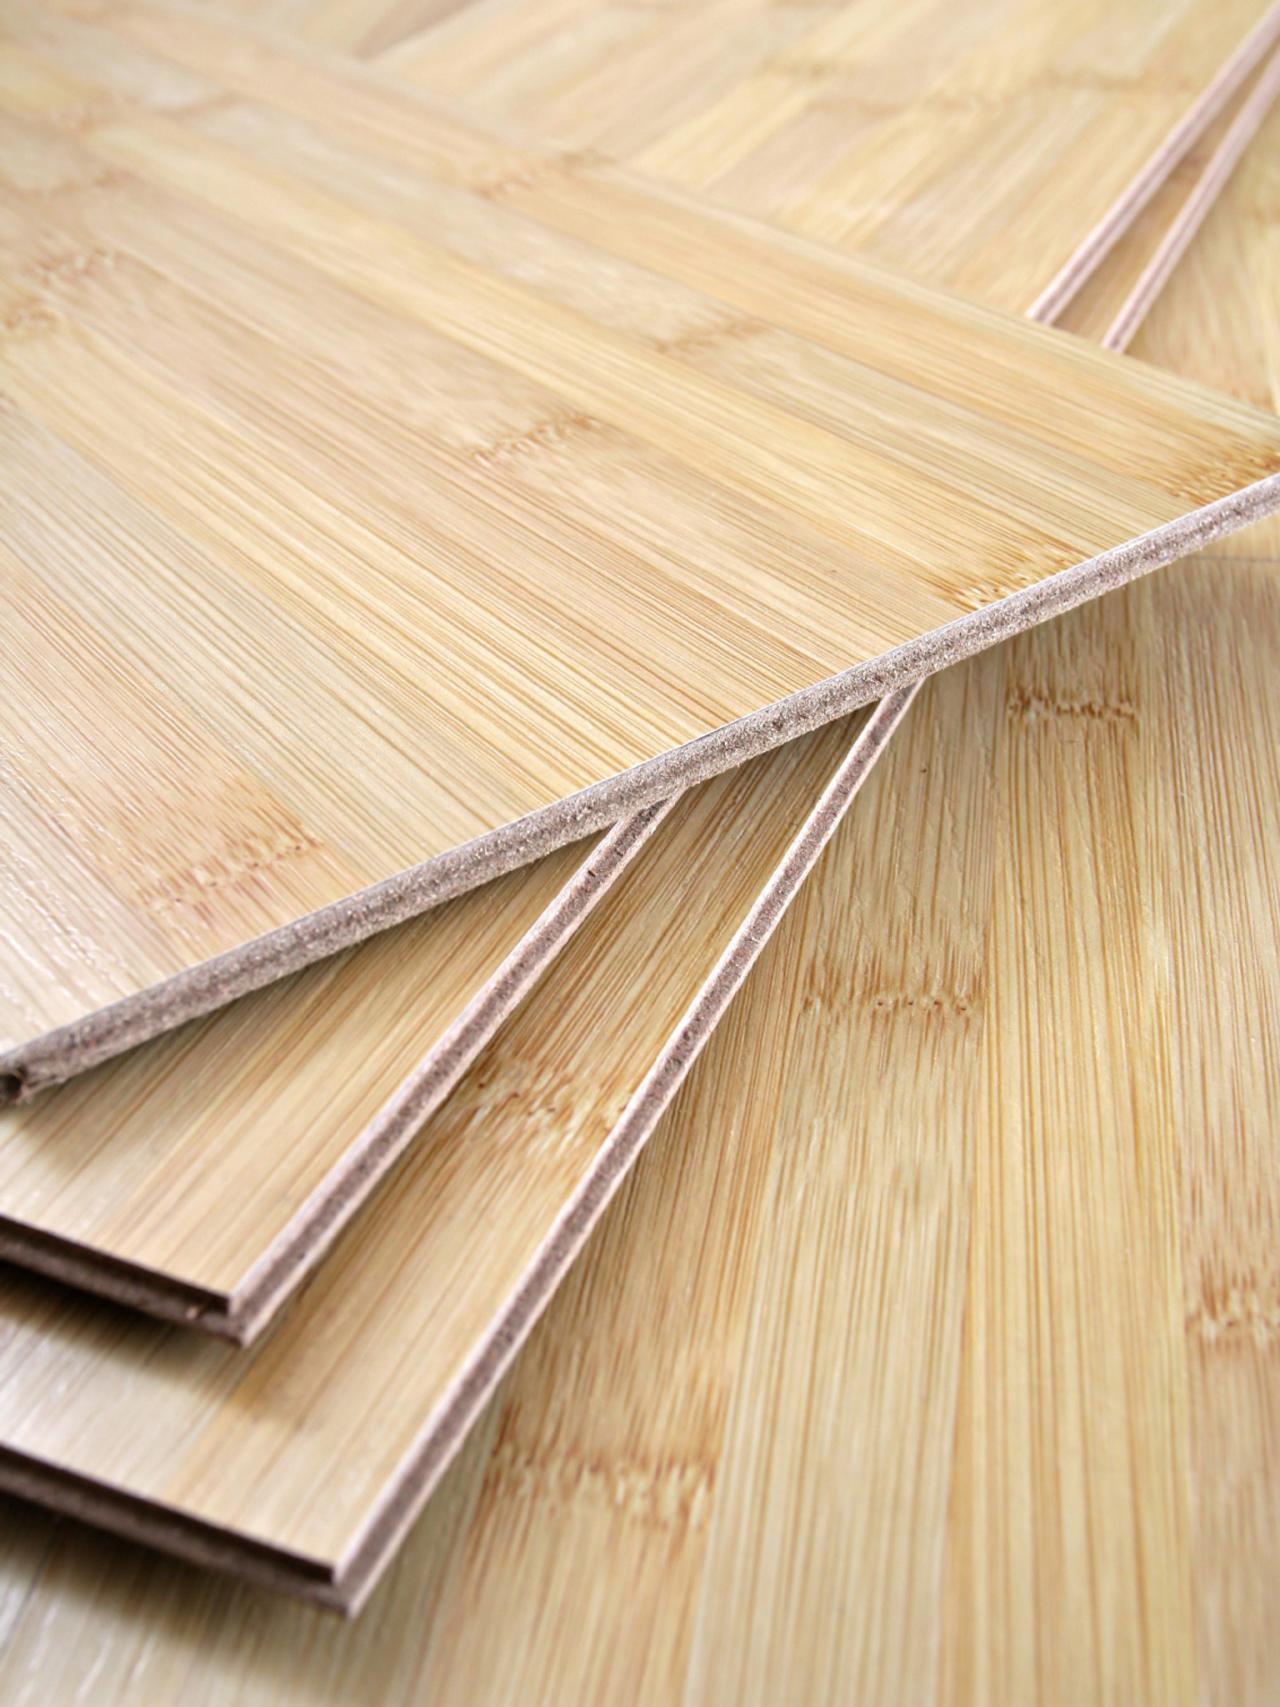 Cost Of Bamboo Floor Vs Engineered Hardwood, Tile That Looks Like Bamboo Wood Flooring